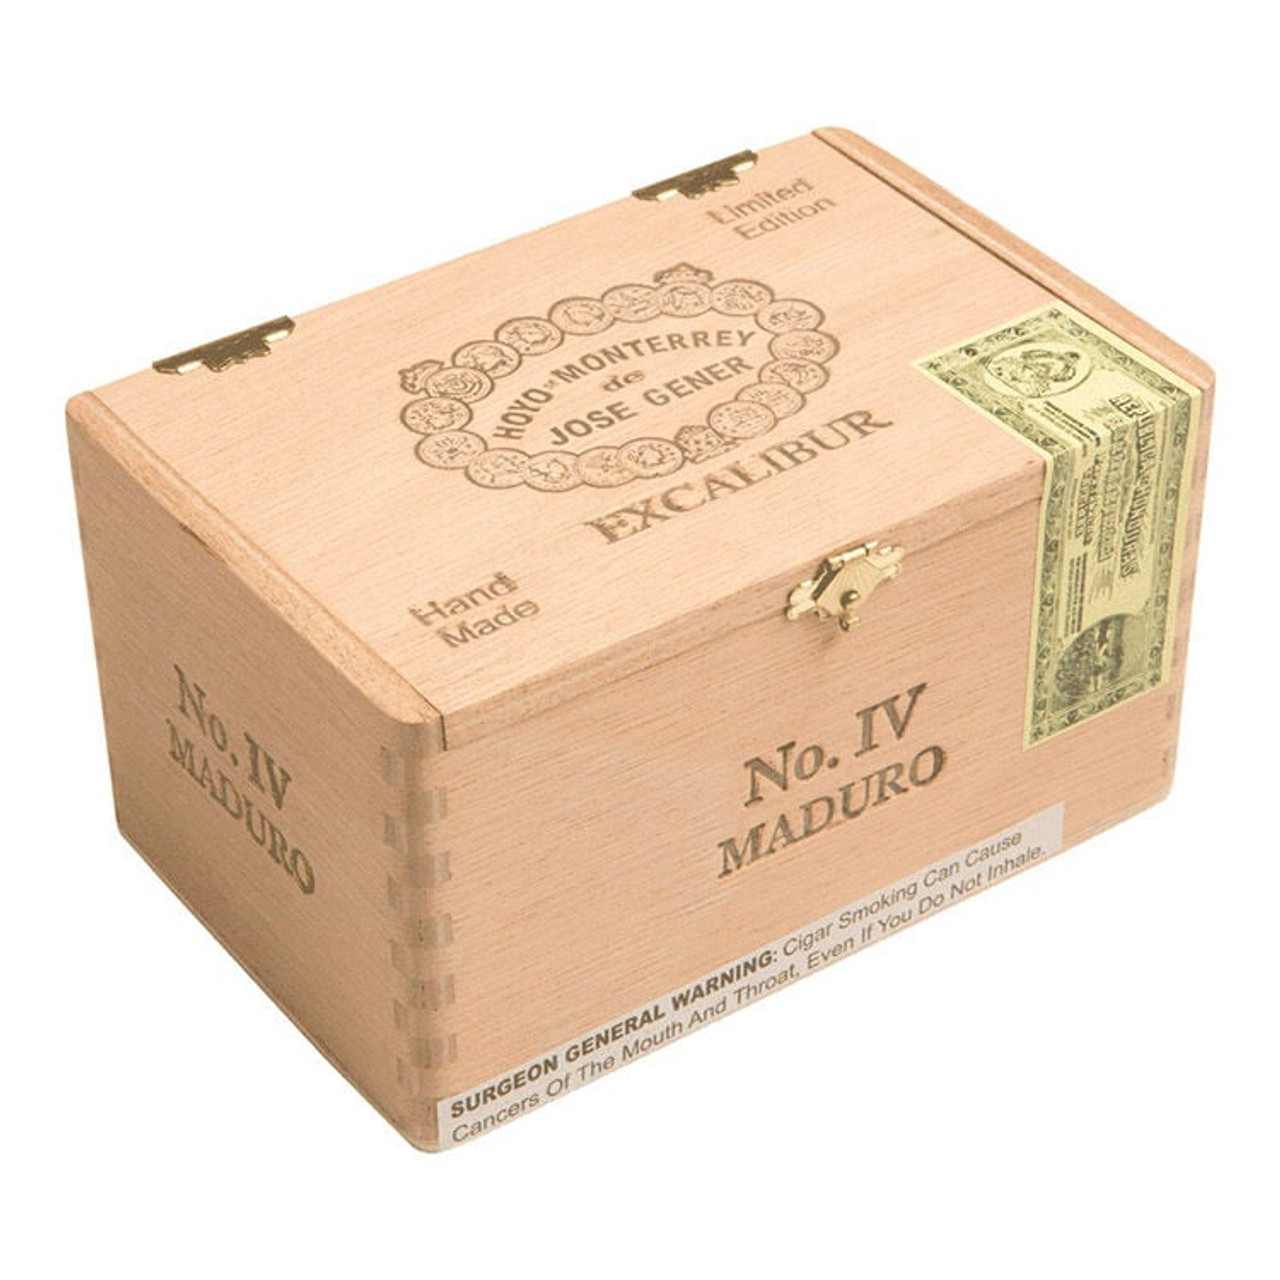 Excalibur No. III Maduro Cigars - 6.12 x 48 (Box of 20) *Box